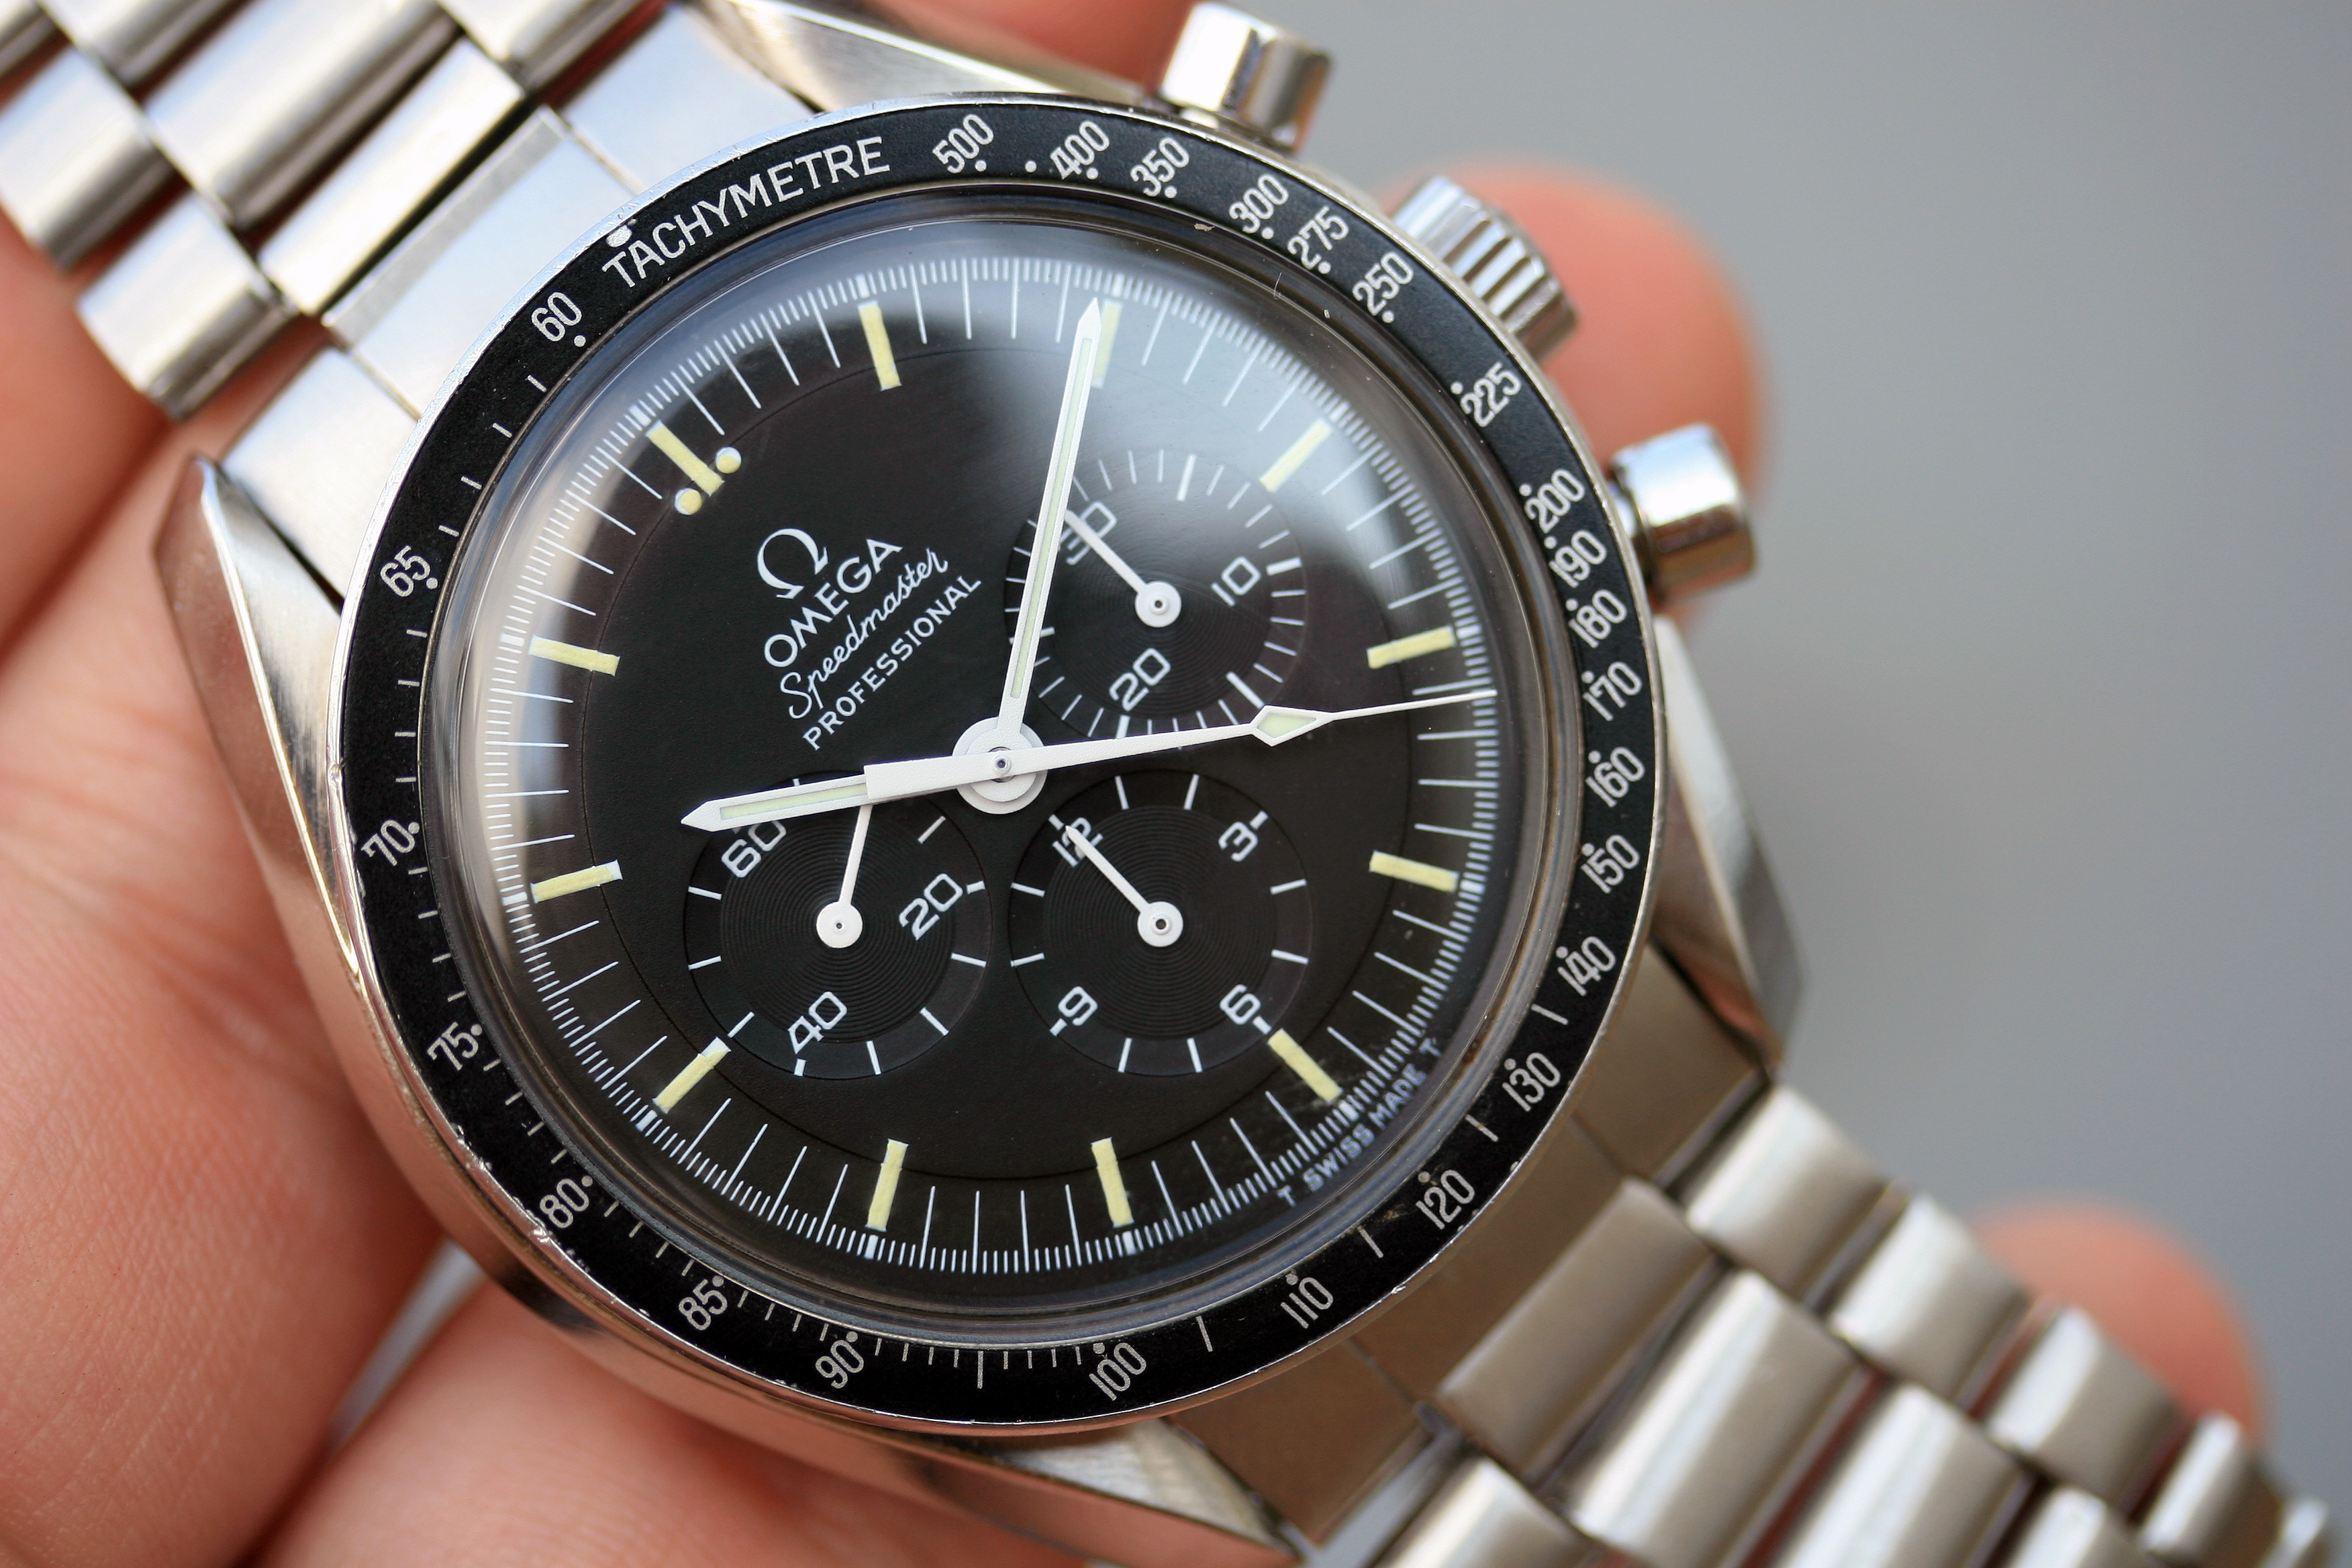 1977 omega watch